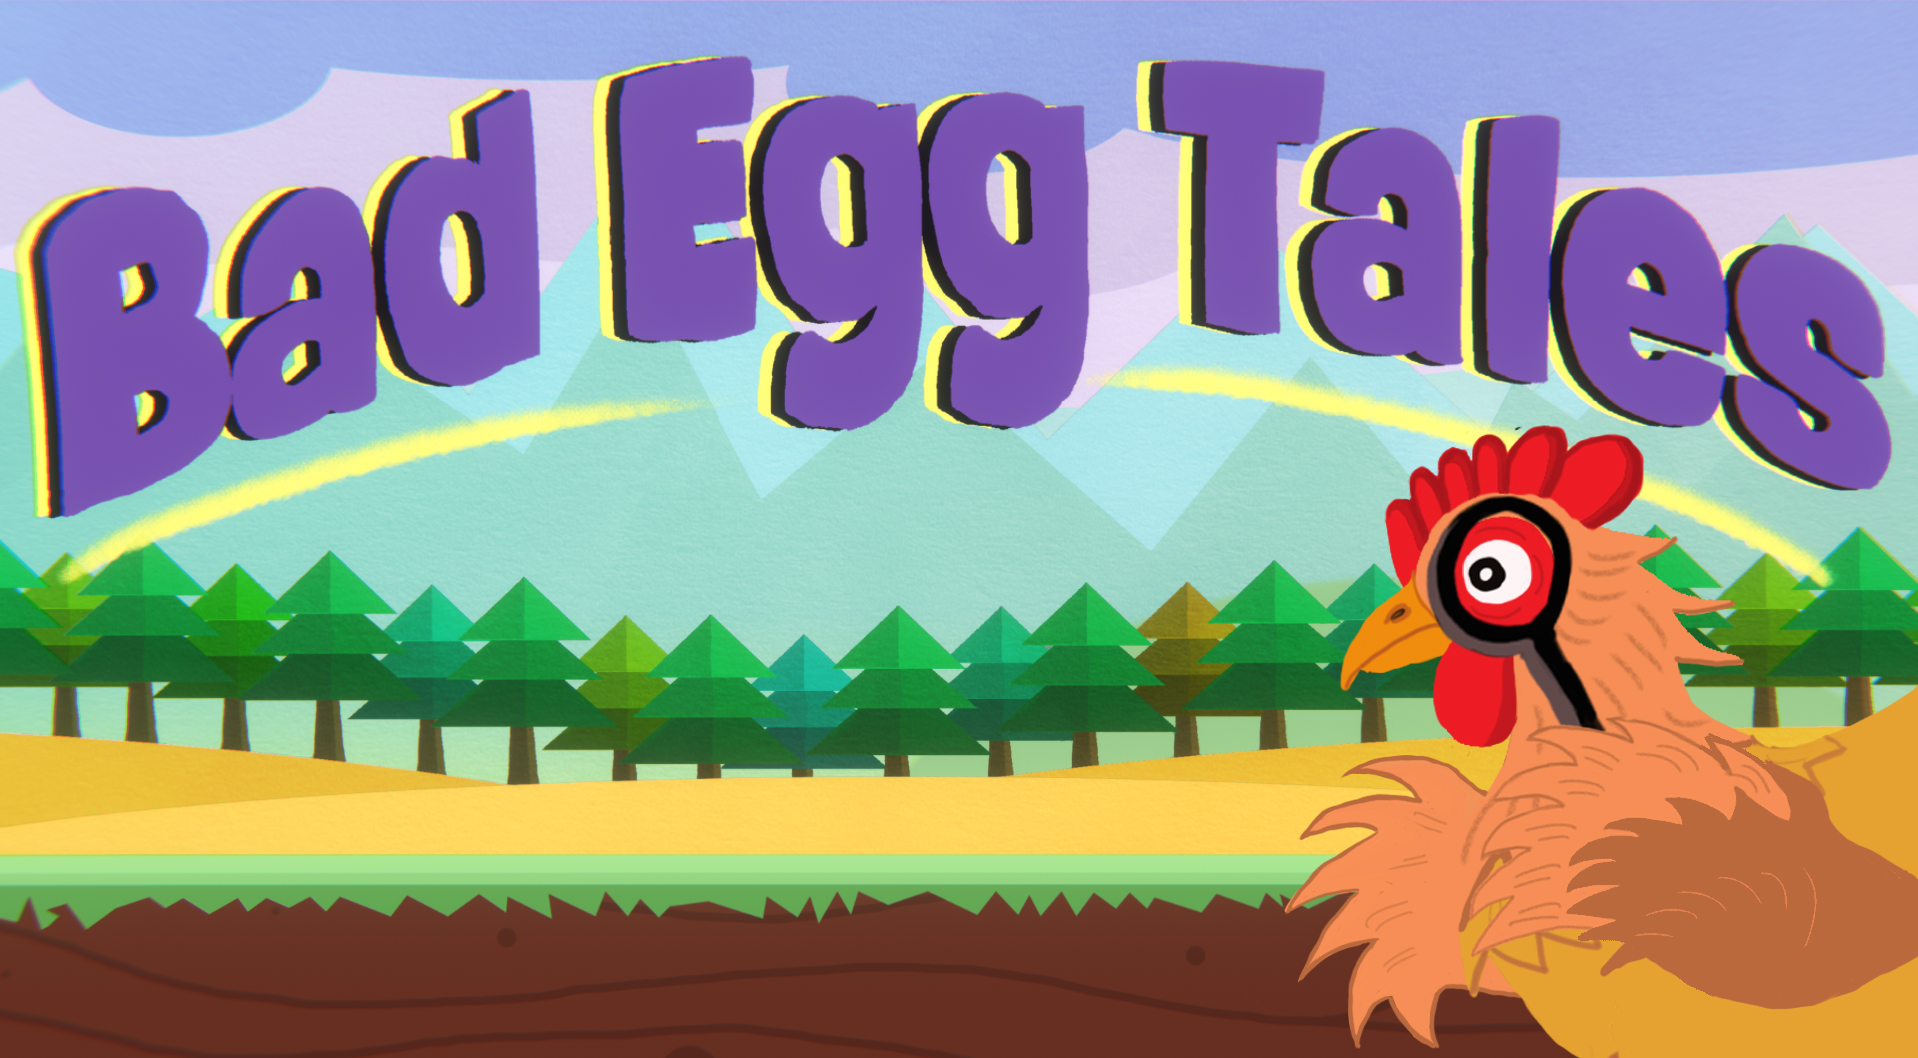 Bad Egg Tales